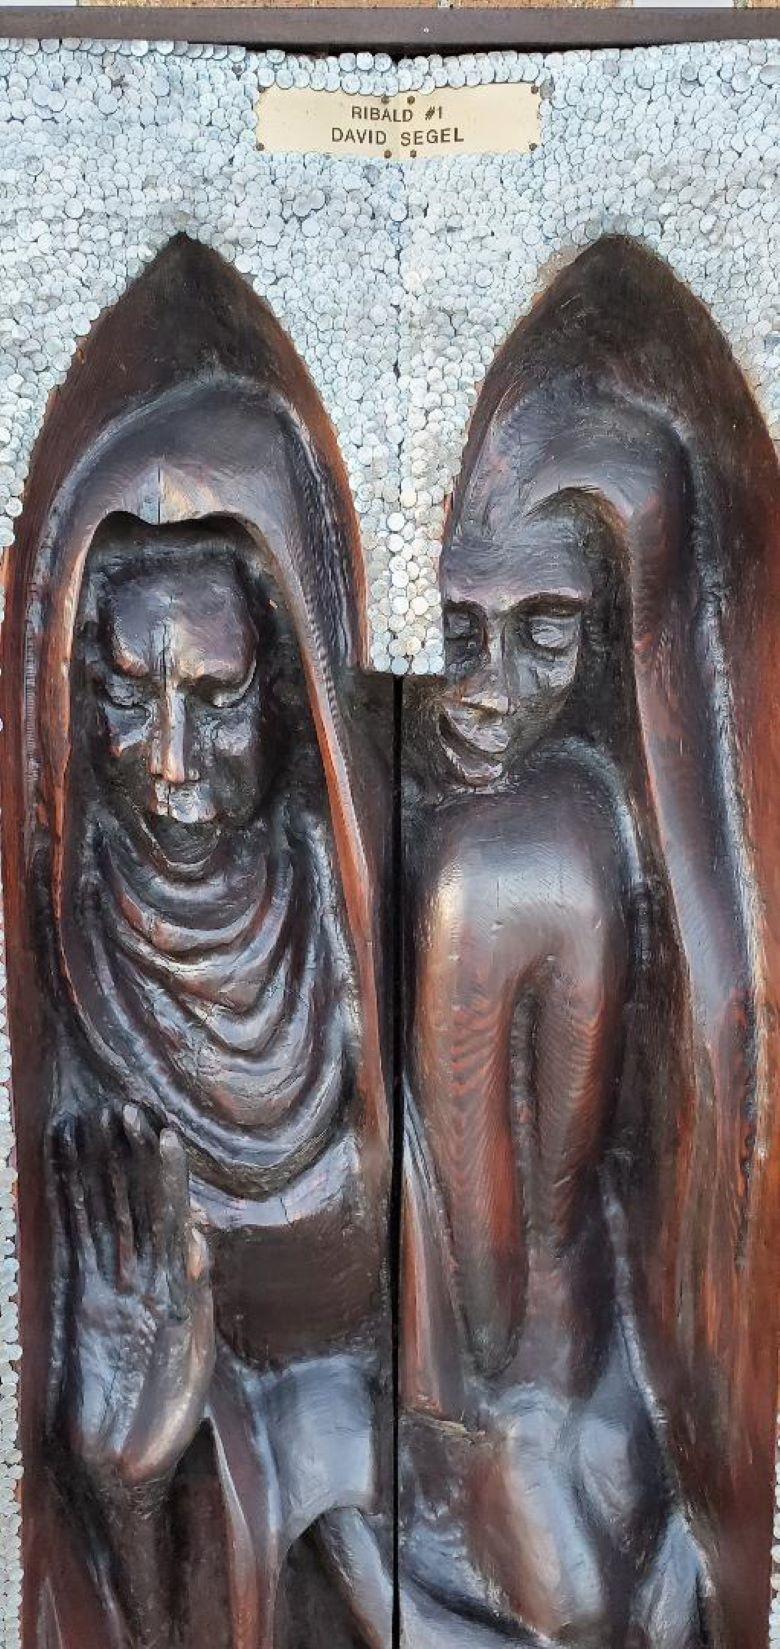 David Segel, 3-D-Volkskunst-Skulptur aus Holz mit doppeltem Kiot, 1970er Jahre (20. Jahrhundert) im Angebot